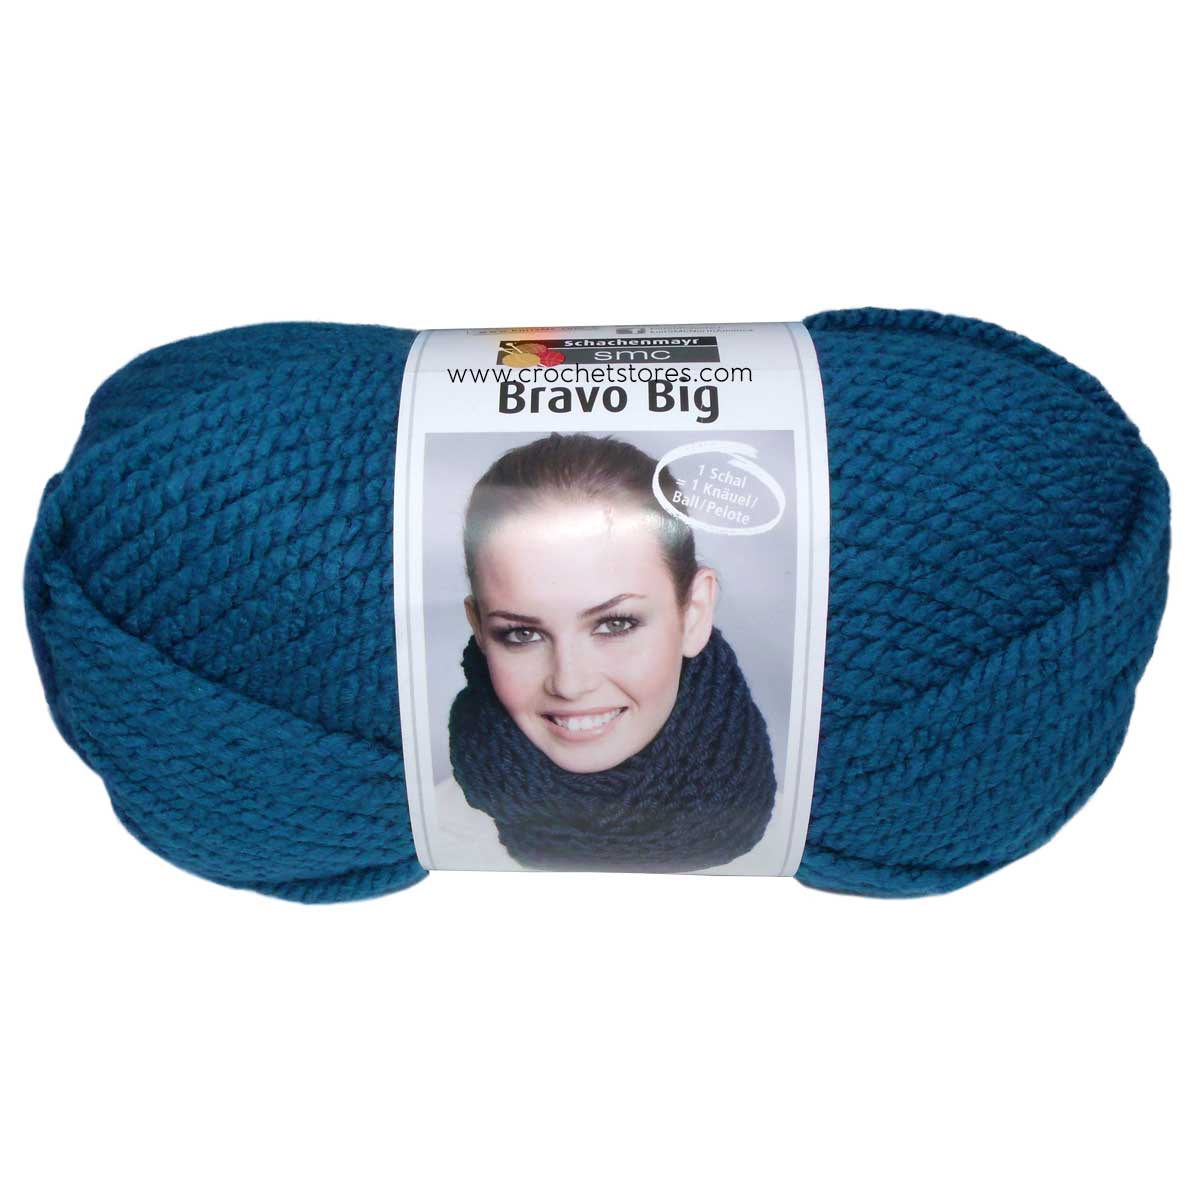 BRAVO BIG - Crochetstores9807705-1524082700833252